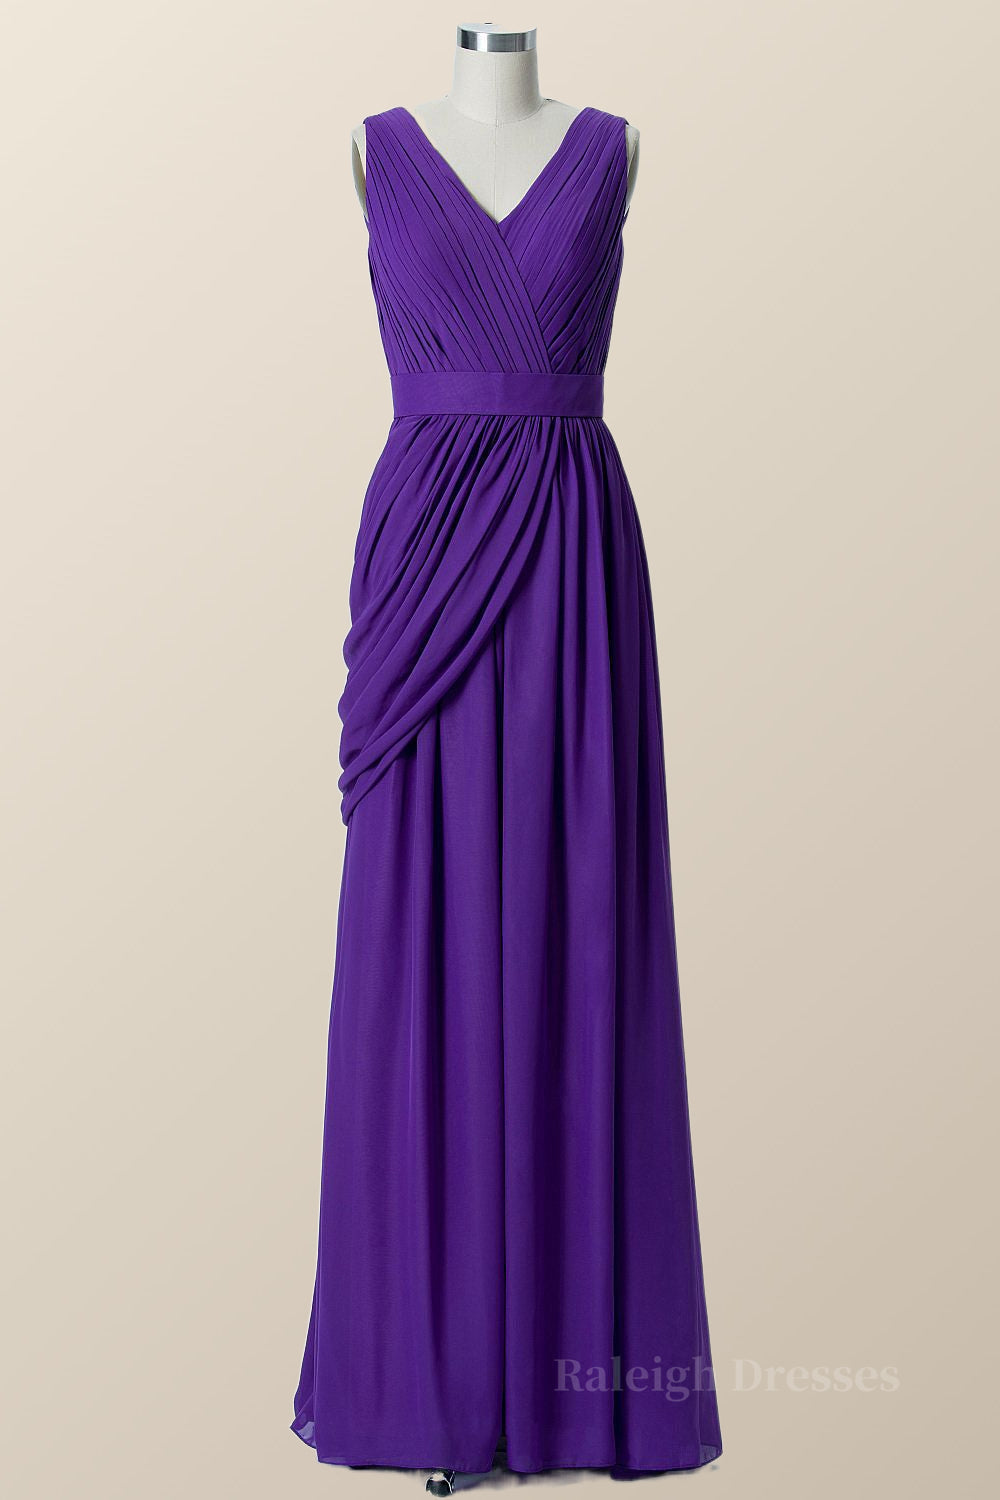 V Neck Purple Pleated Chiffon A-line Bridesmaid Dress